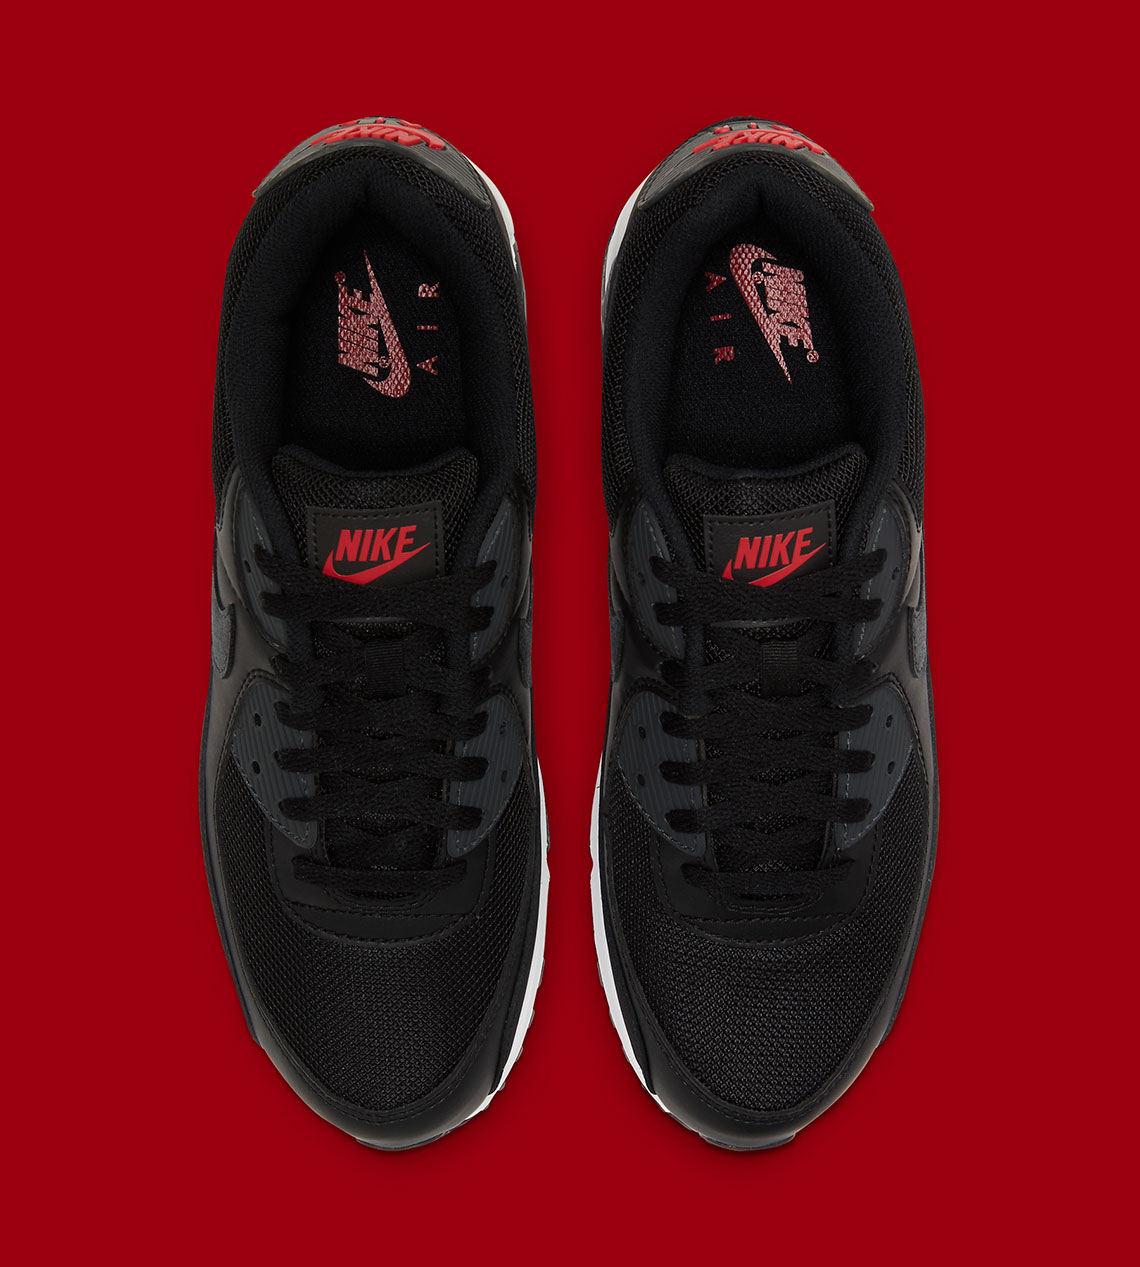 Despedida estante juntos Nike Air Max 90 DH4095-001 Black University Red| SneakerNews.com